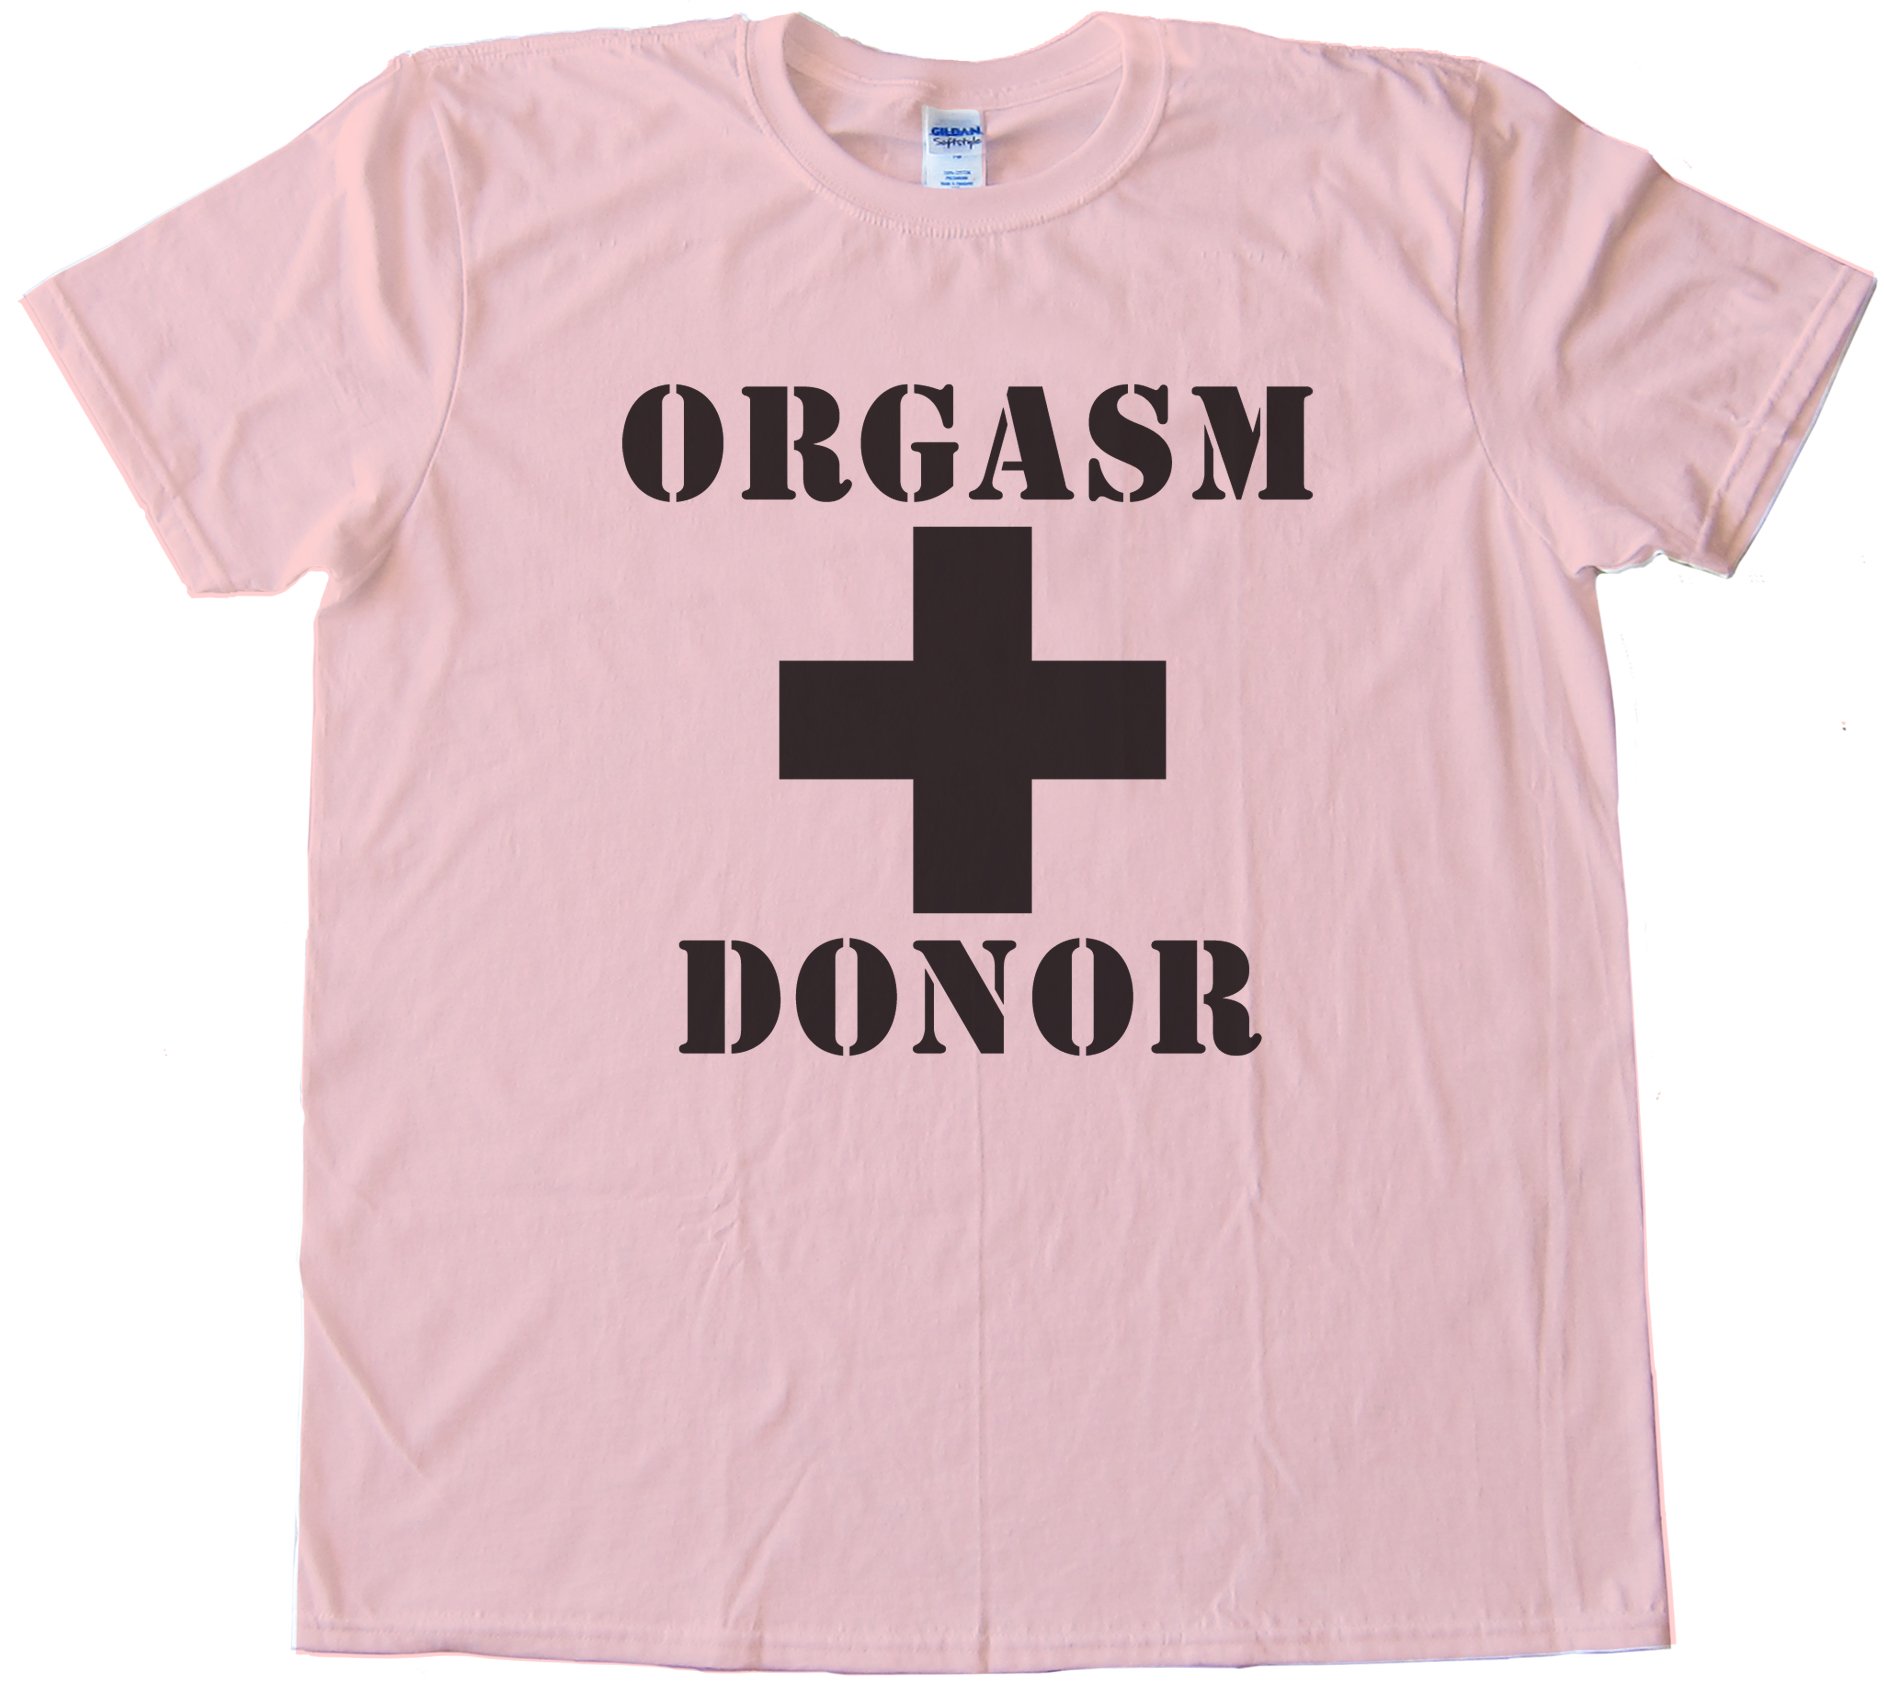 Orgasm Donor Hilarious Tee Shirt